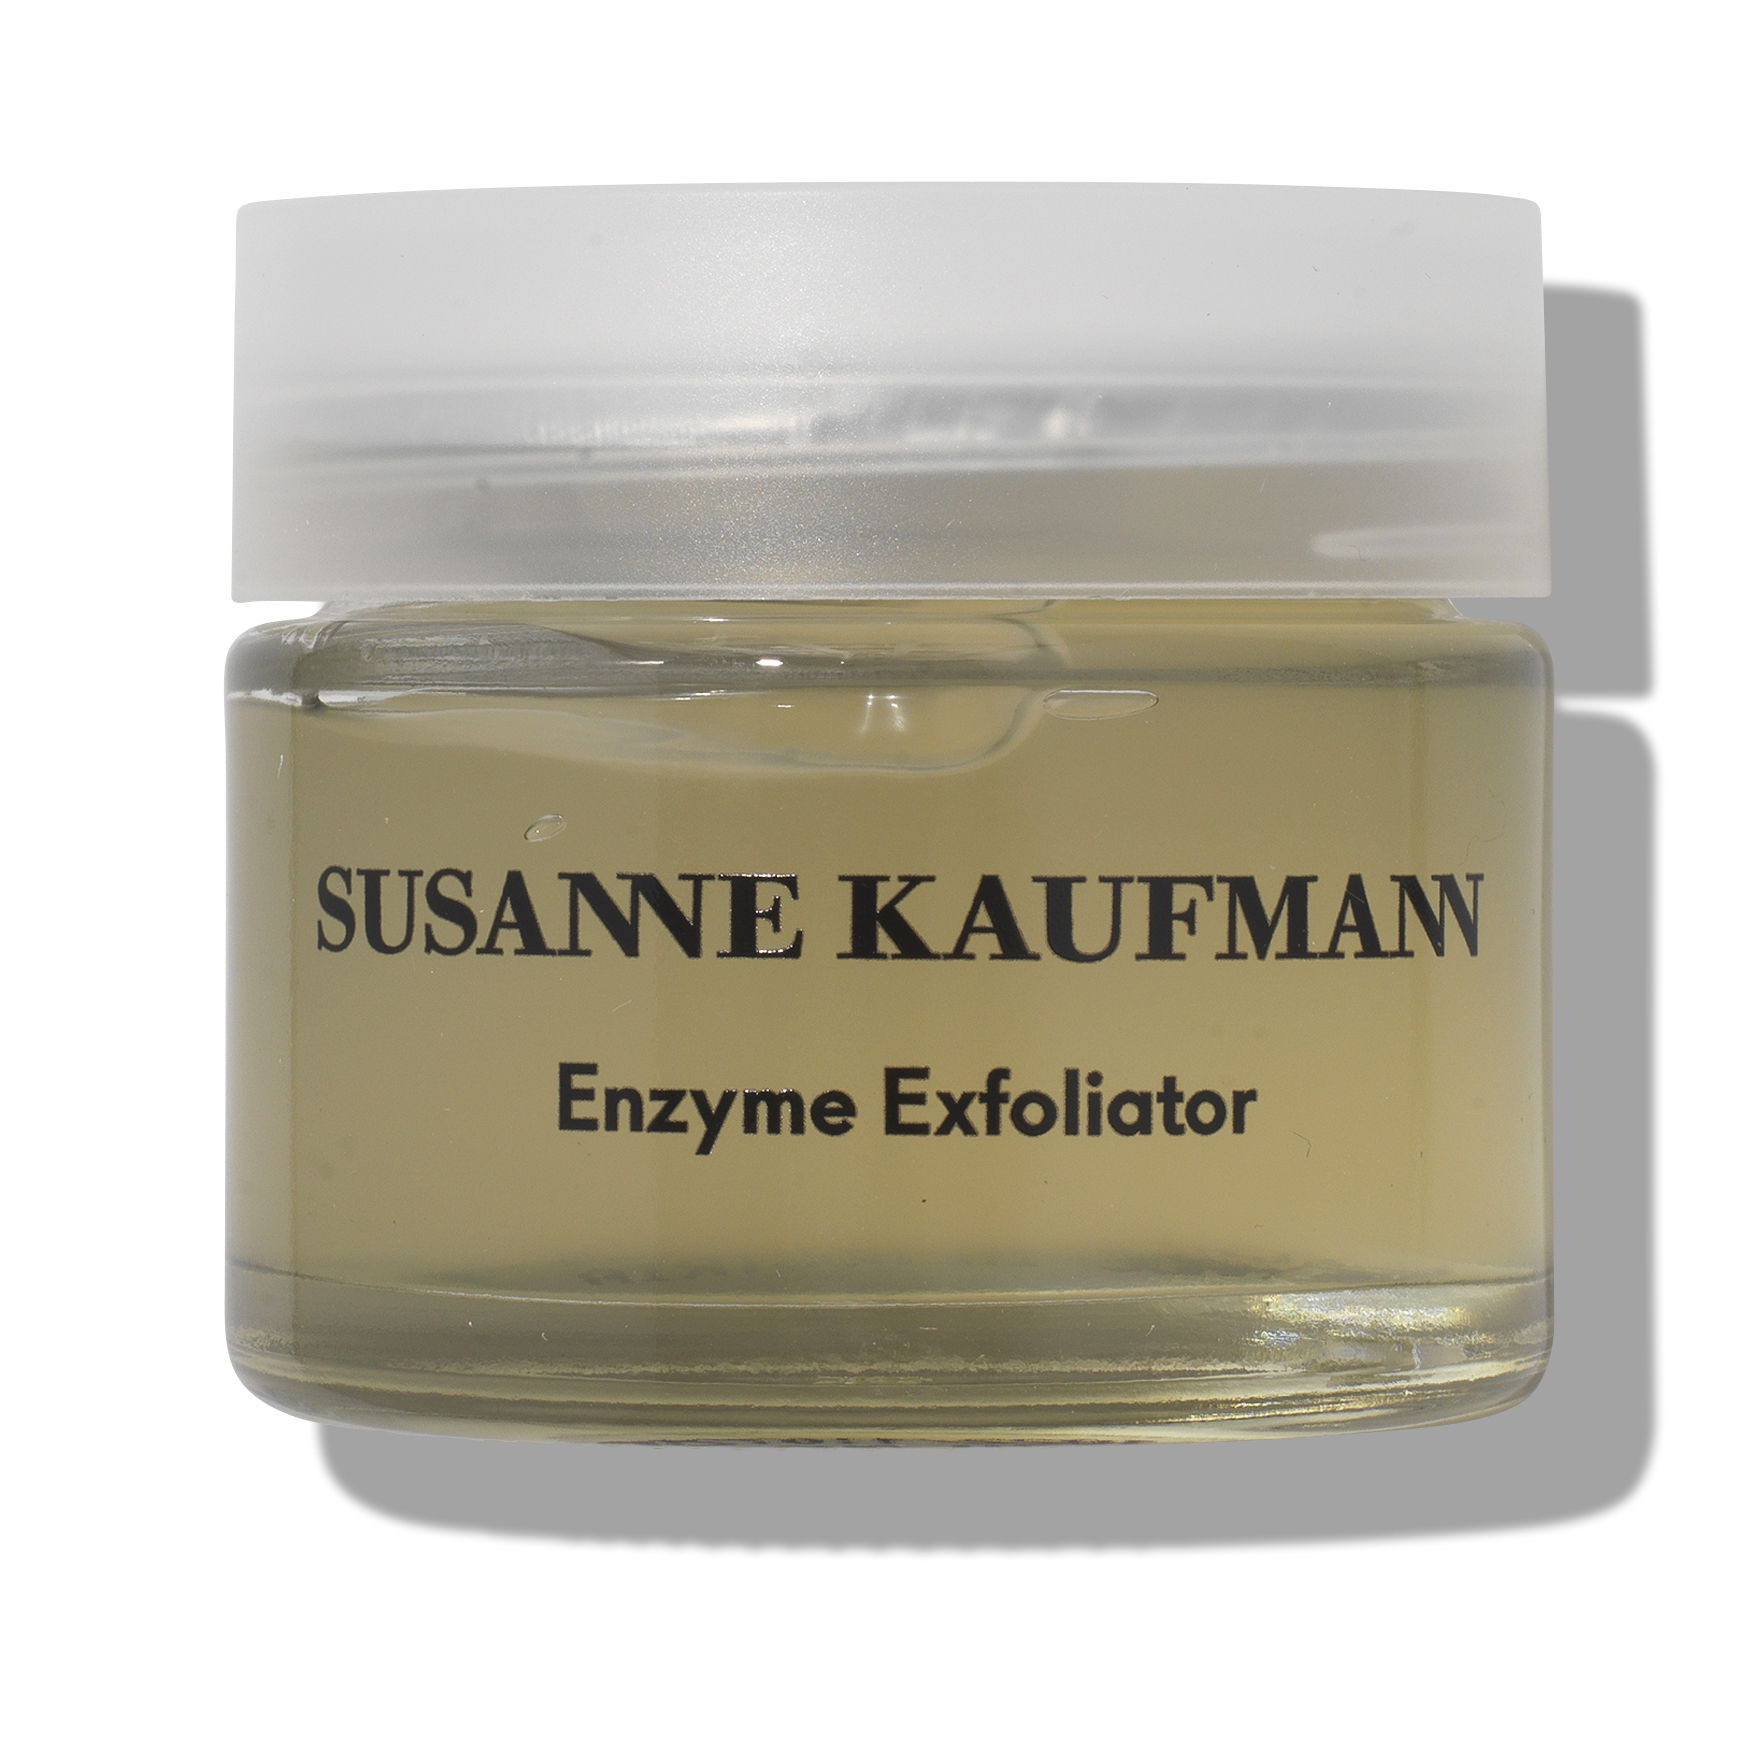 Susanne Kaufmann Enzyme Exfoliator | Space NK